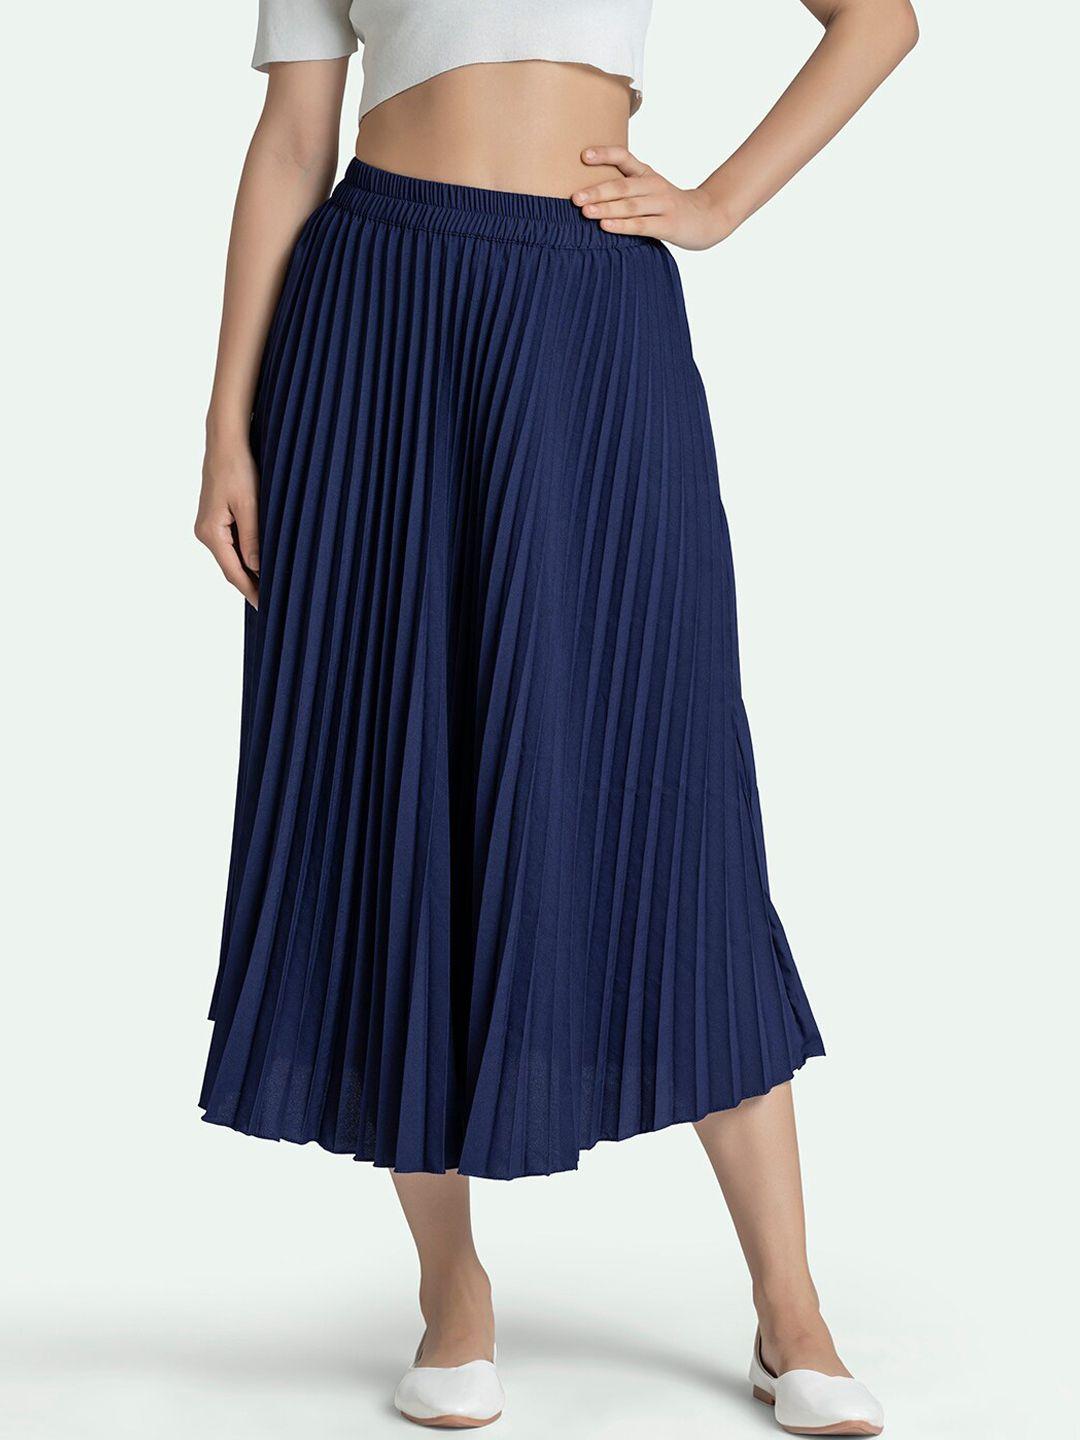 aask women navy blue accordion pleats midi skirt